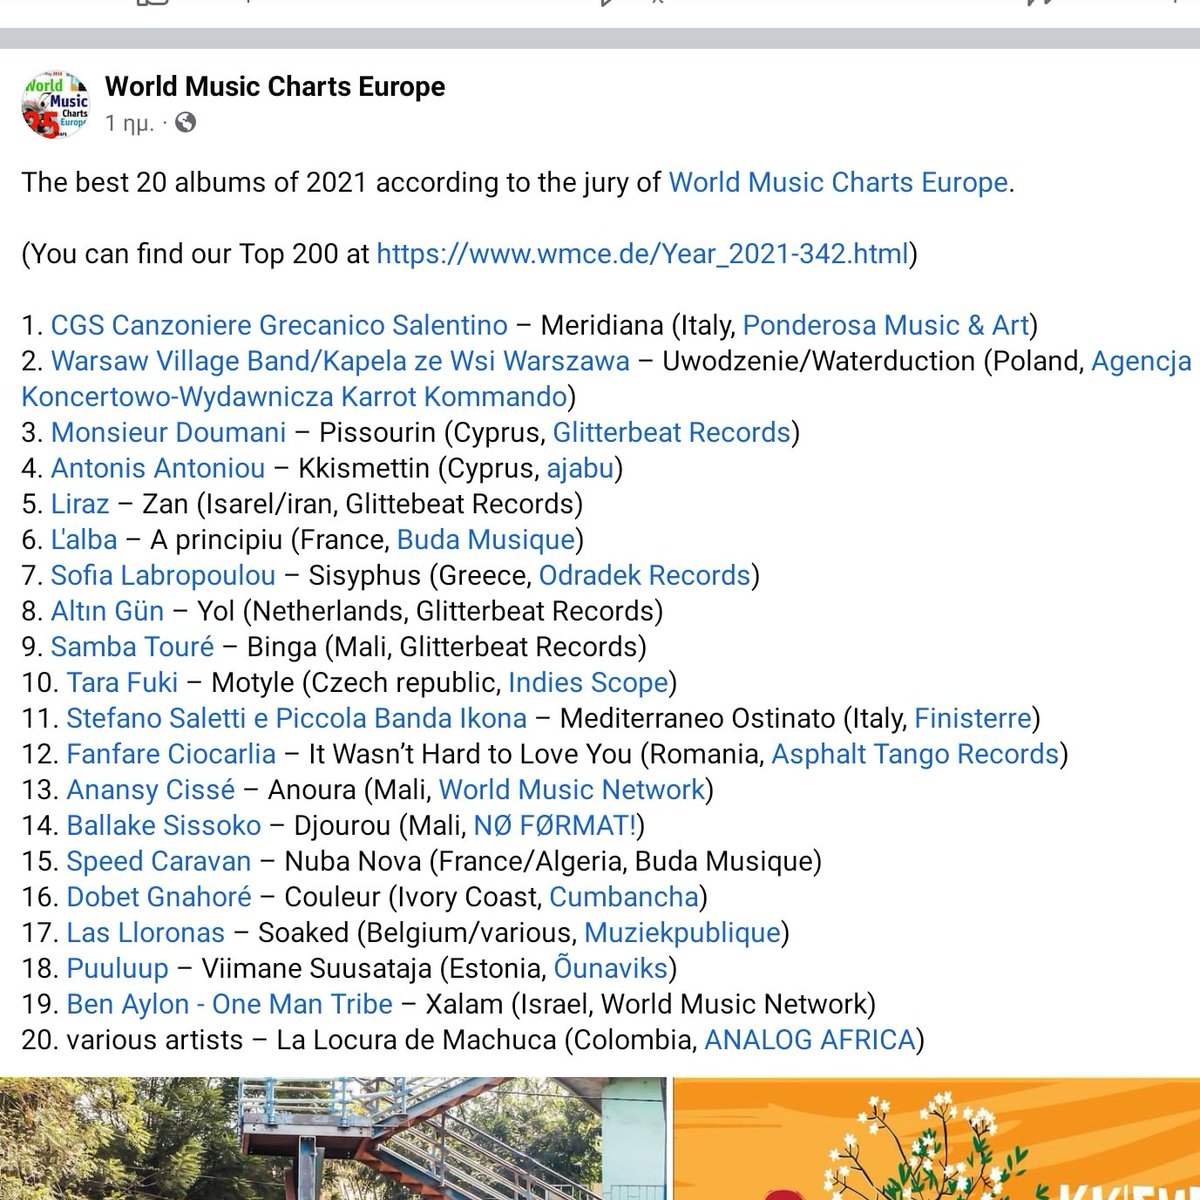 'Sisyphus' #7 in the top 20 for 2021 according to the members of the Jury of the World Music Charts Europe! 
Grateful! <3

#Sisyphus #SofiaLabropoulou Odradek World
#AlbertCamus #Odradekrecords Odradek Records
#WorldMusic #Top20 #WorldMusicChartsEurope